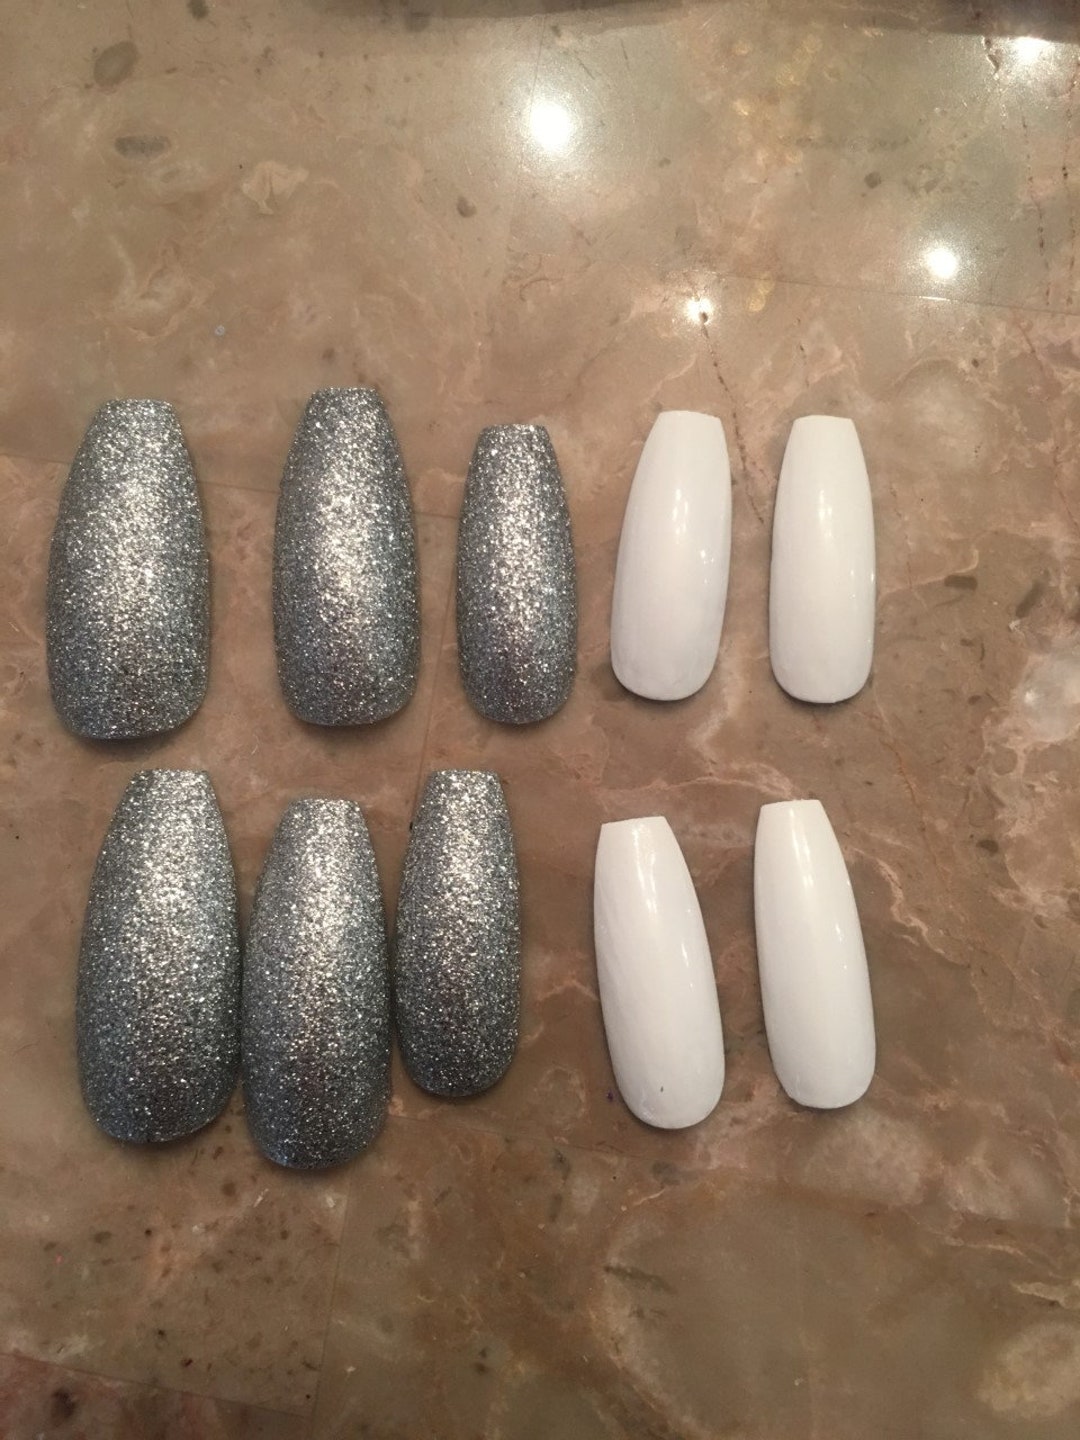 Trendy nails | Acrylic nails coffin glitter, Gel nails, Acrylic nails